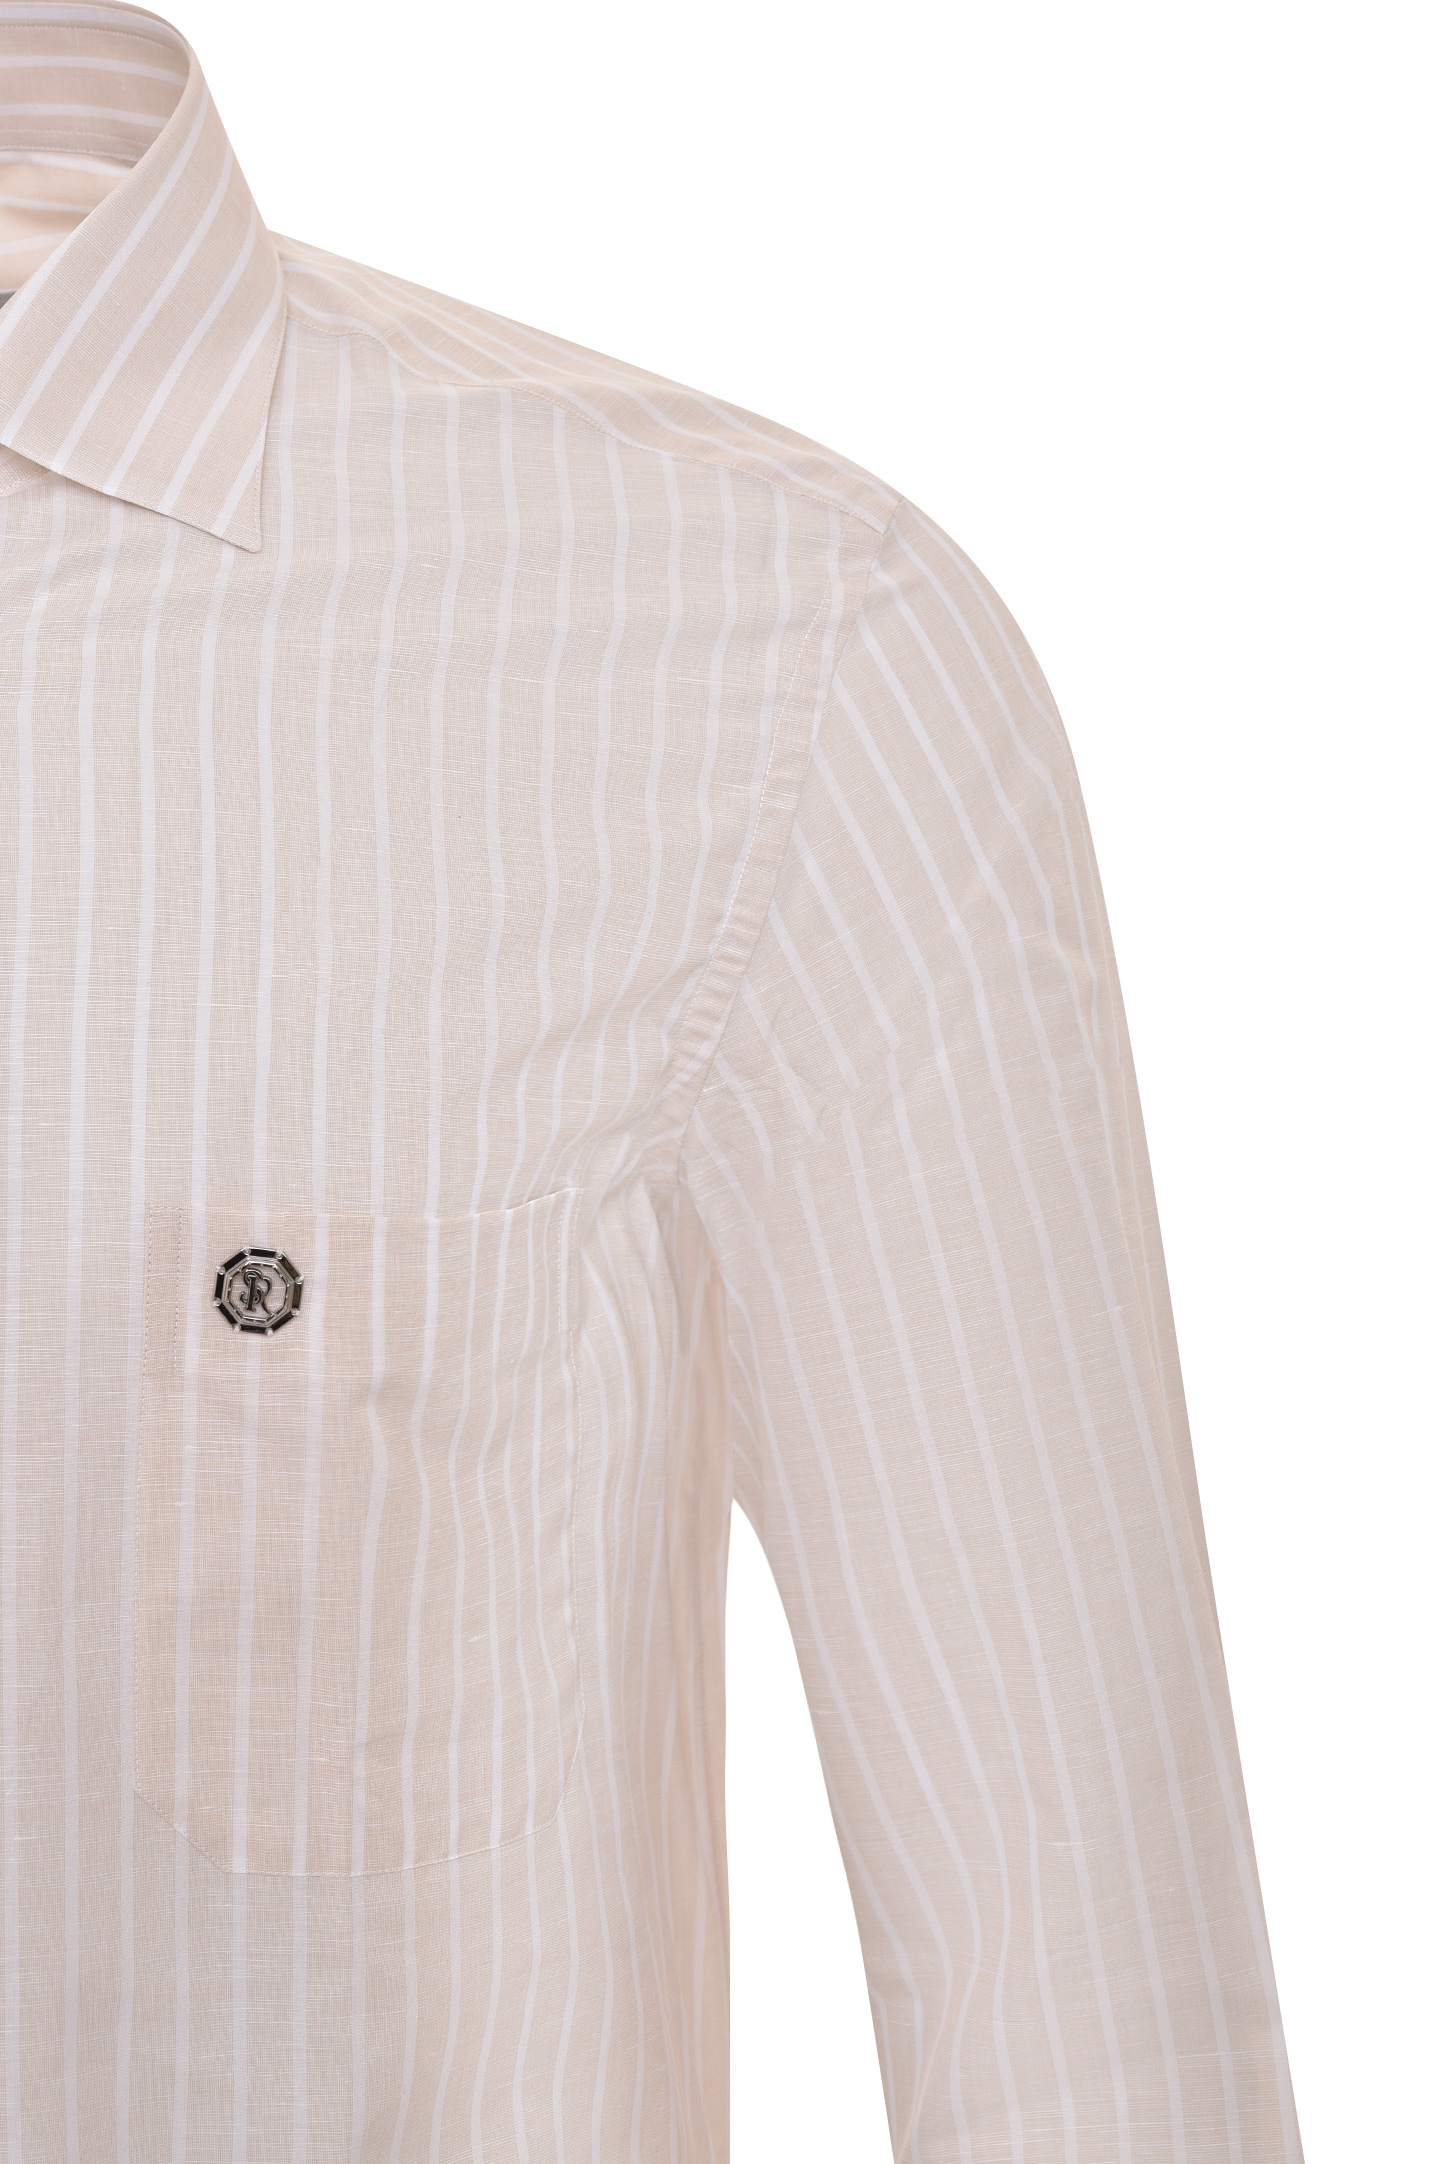 Рубашка STEFANO RICCI MC005694 R2359, цвет: Бежевый, Мужской